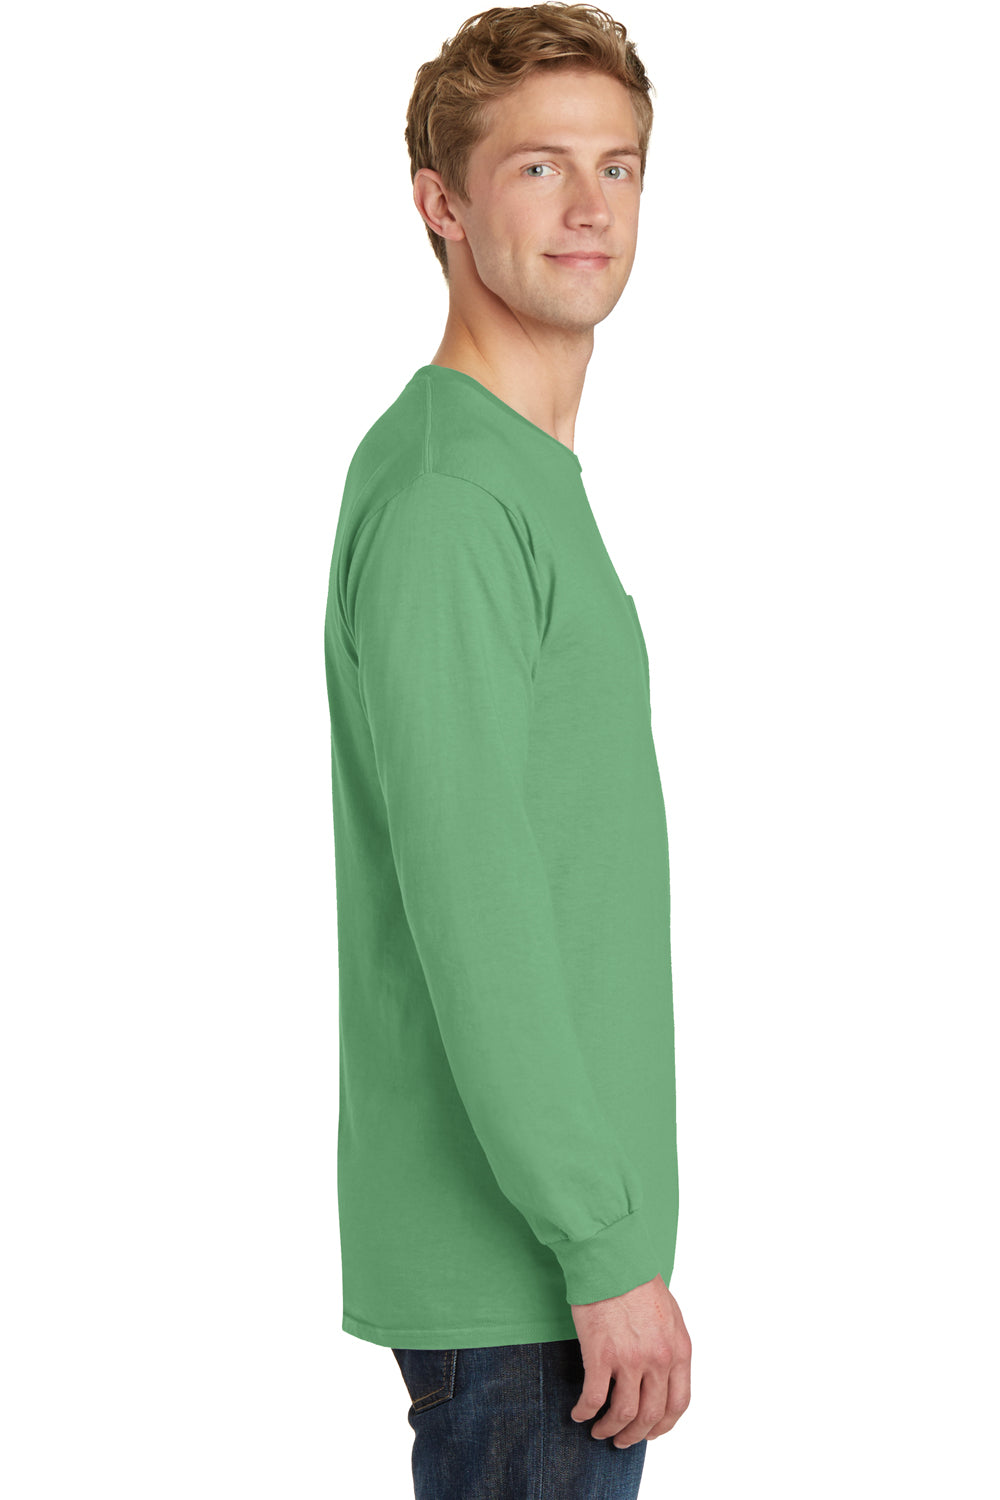 Port & Company PC099LSP Mens Beach Wash Long Sleeve Crewneck T-Shirt w/ Pocket Safari Green Side